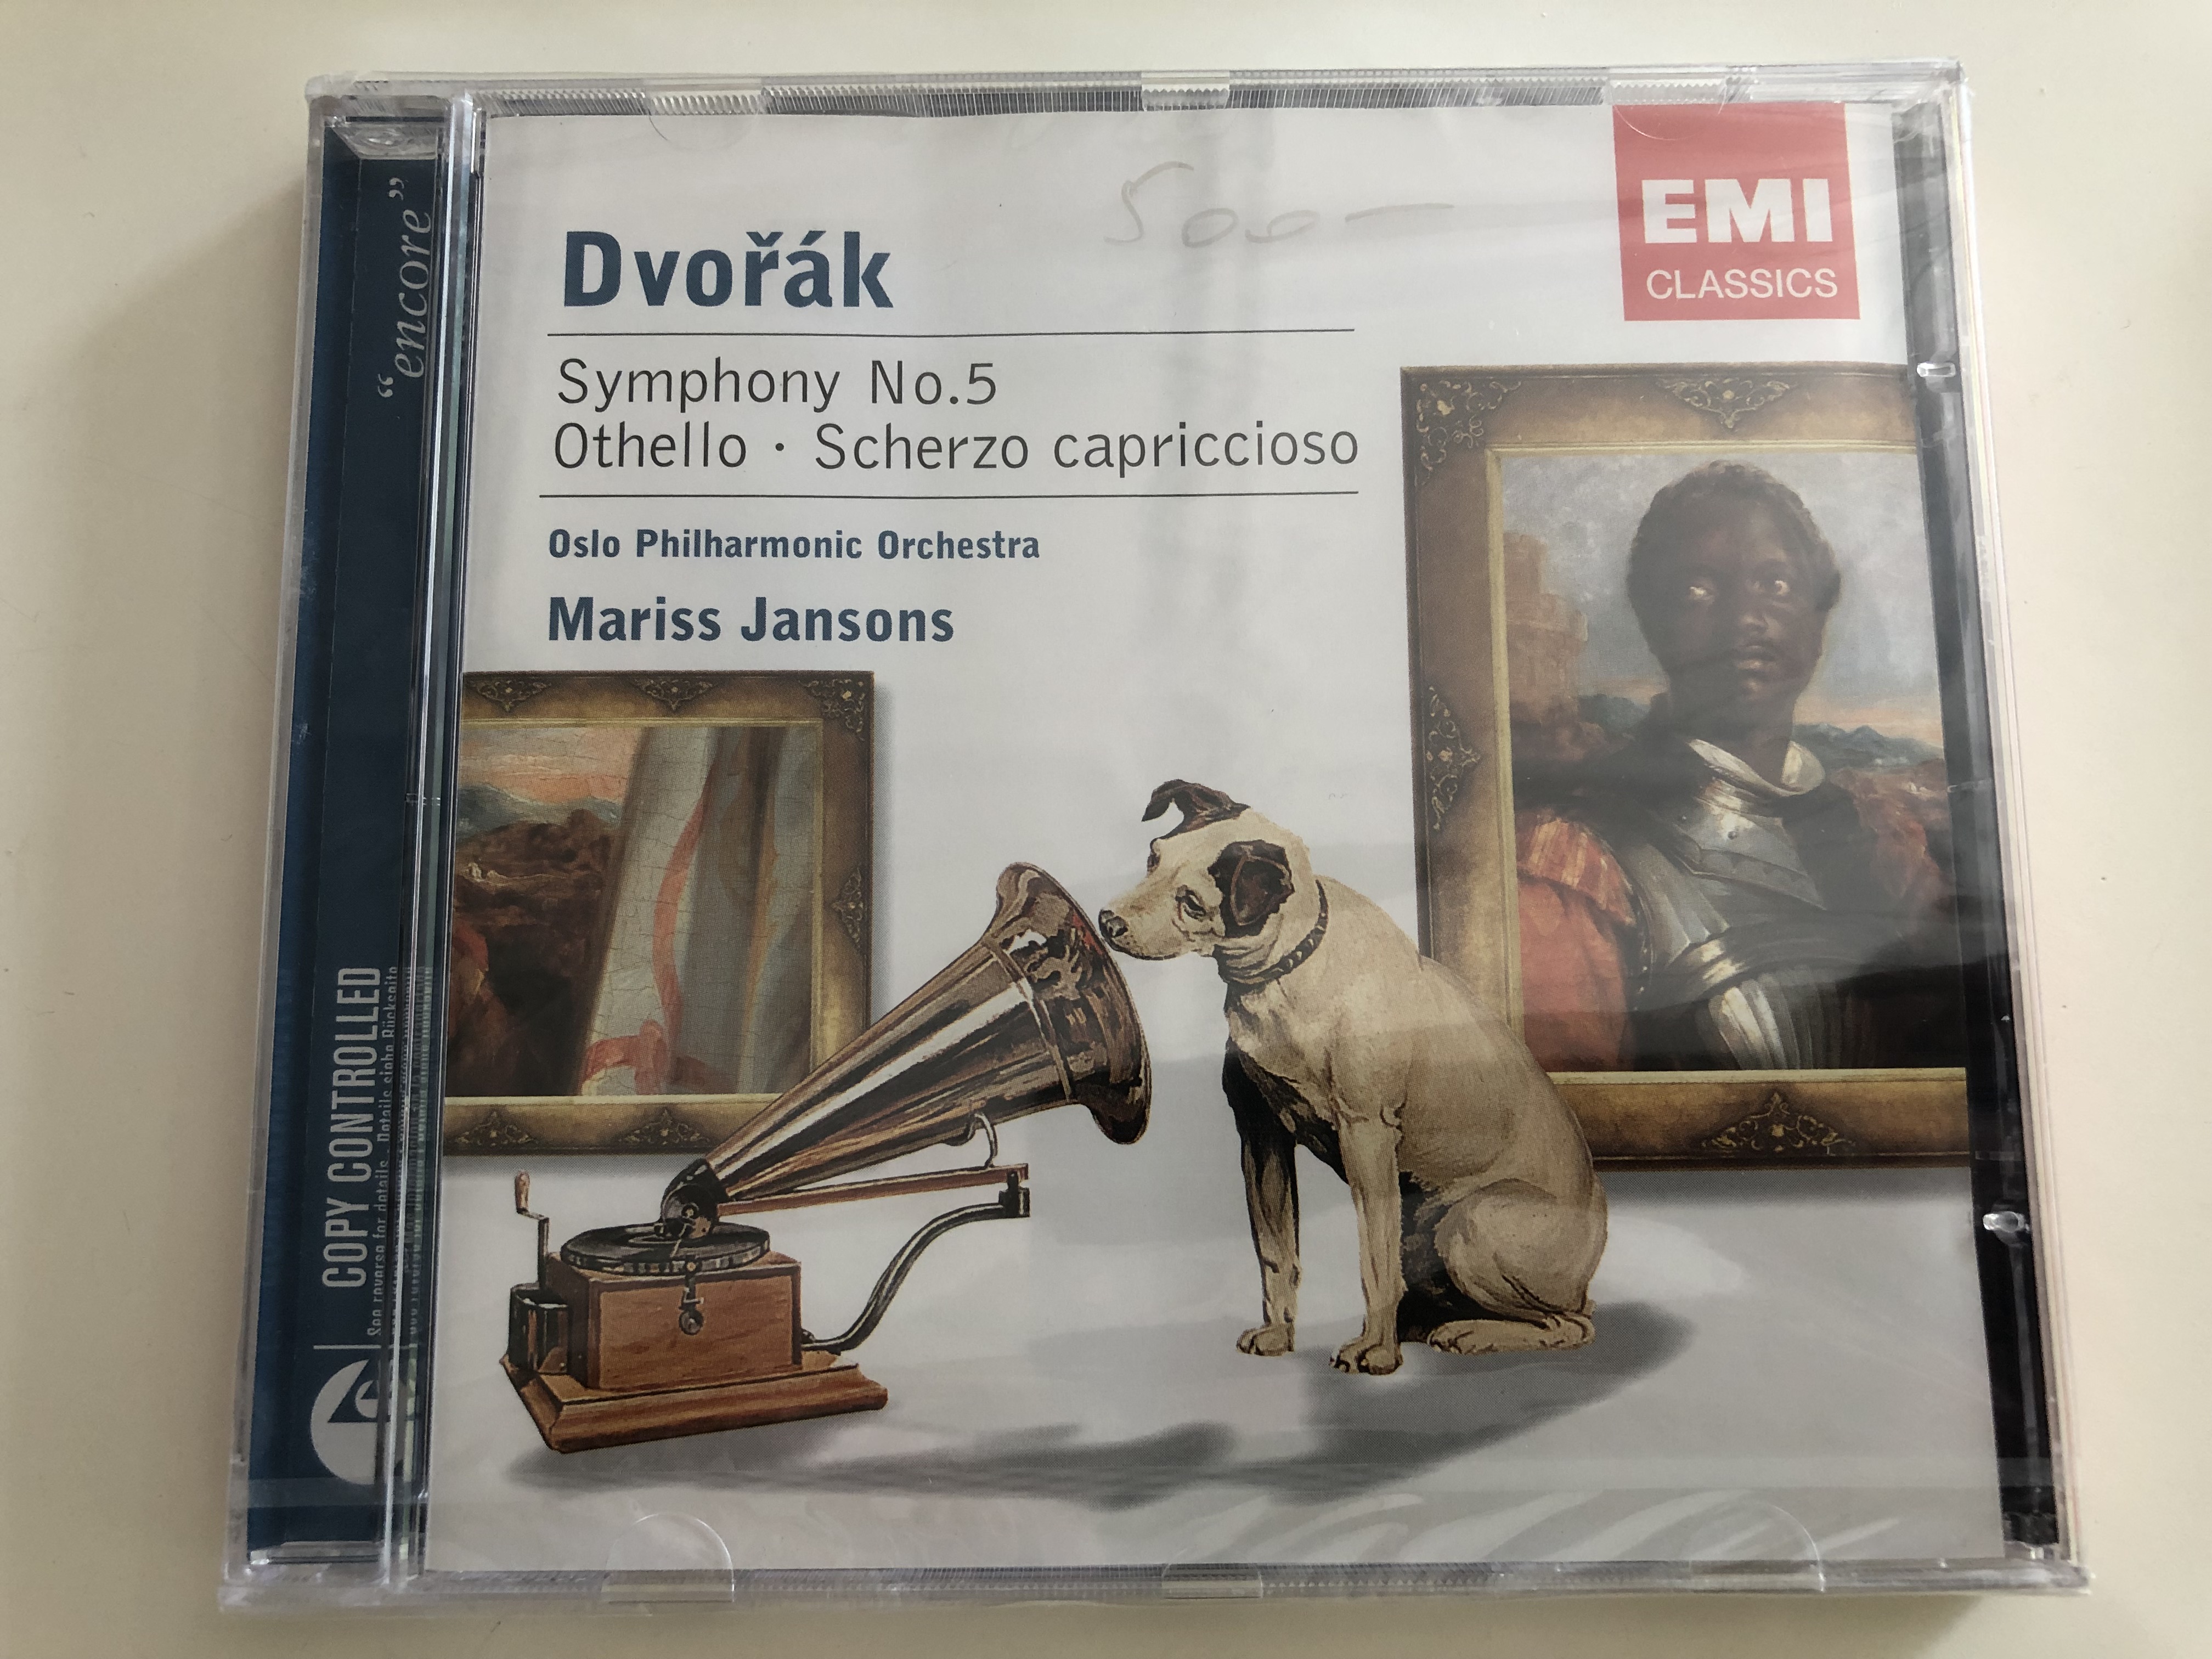 dvo-k-symphony-no.-5-othello-scherzo-capriccioso-oslo-philharmonic-orchestra-conducted-by-mariss-jansons-emi-classics-audio-cd-2004-1-.jpg